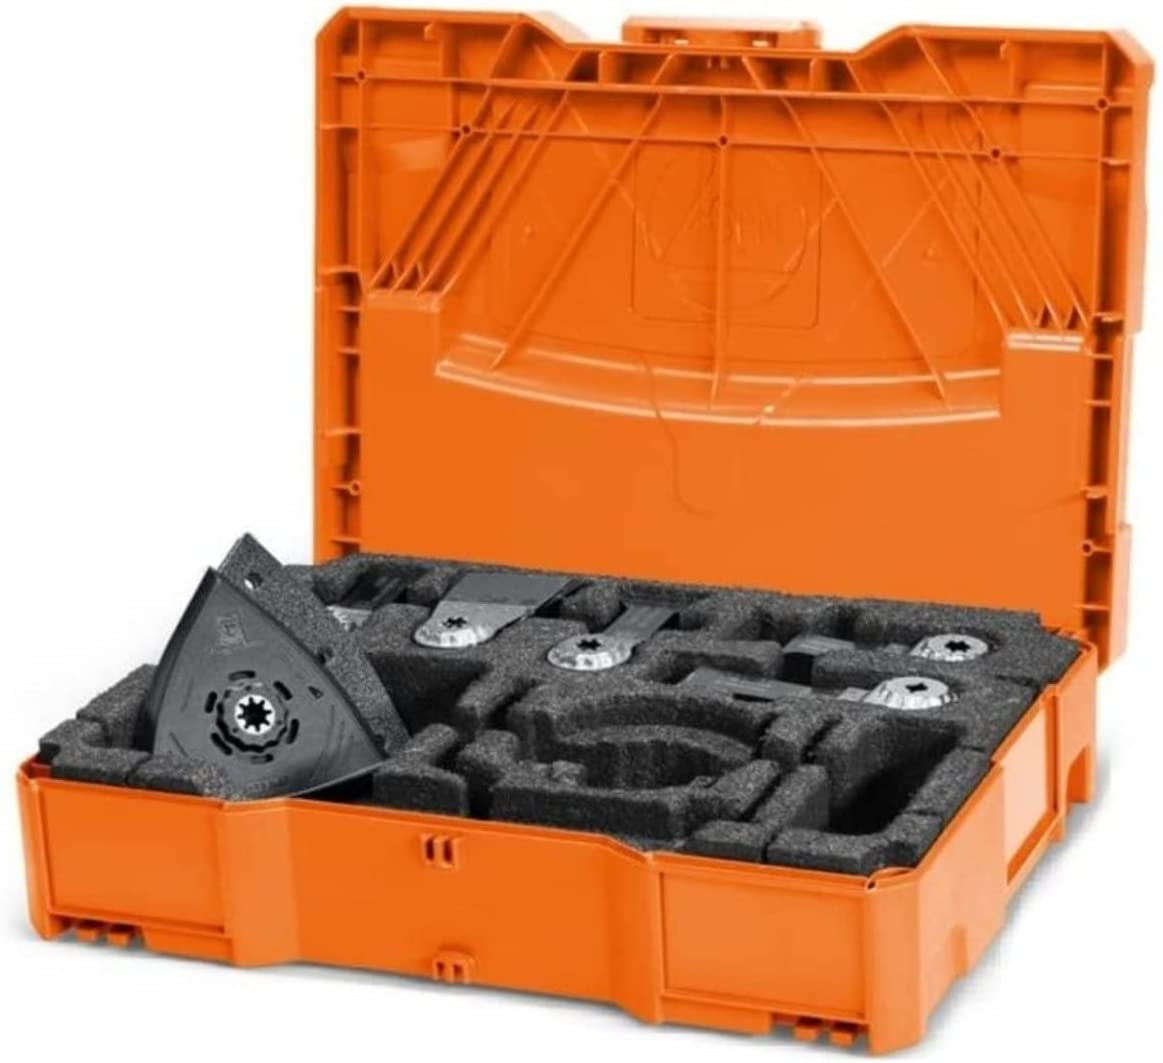 FEIN, Fein Starlock plus Systainer Kit with Accessories - Orange - 33901146220